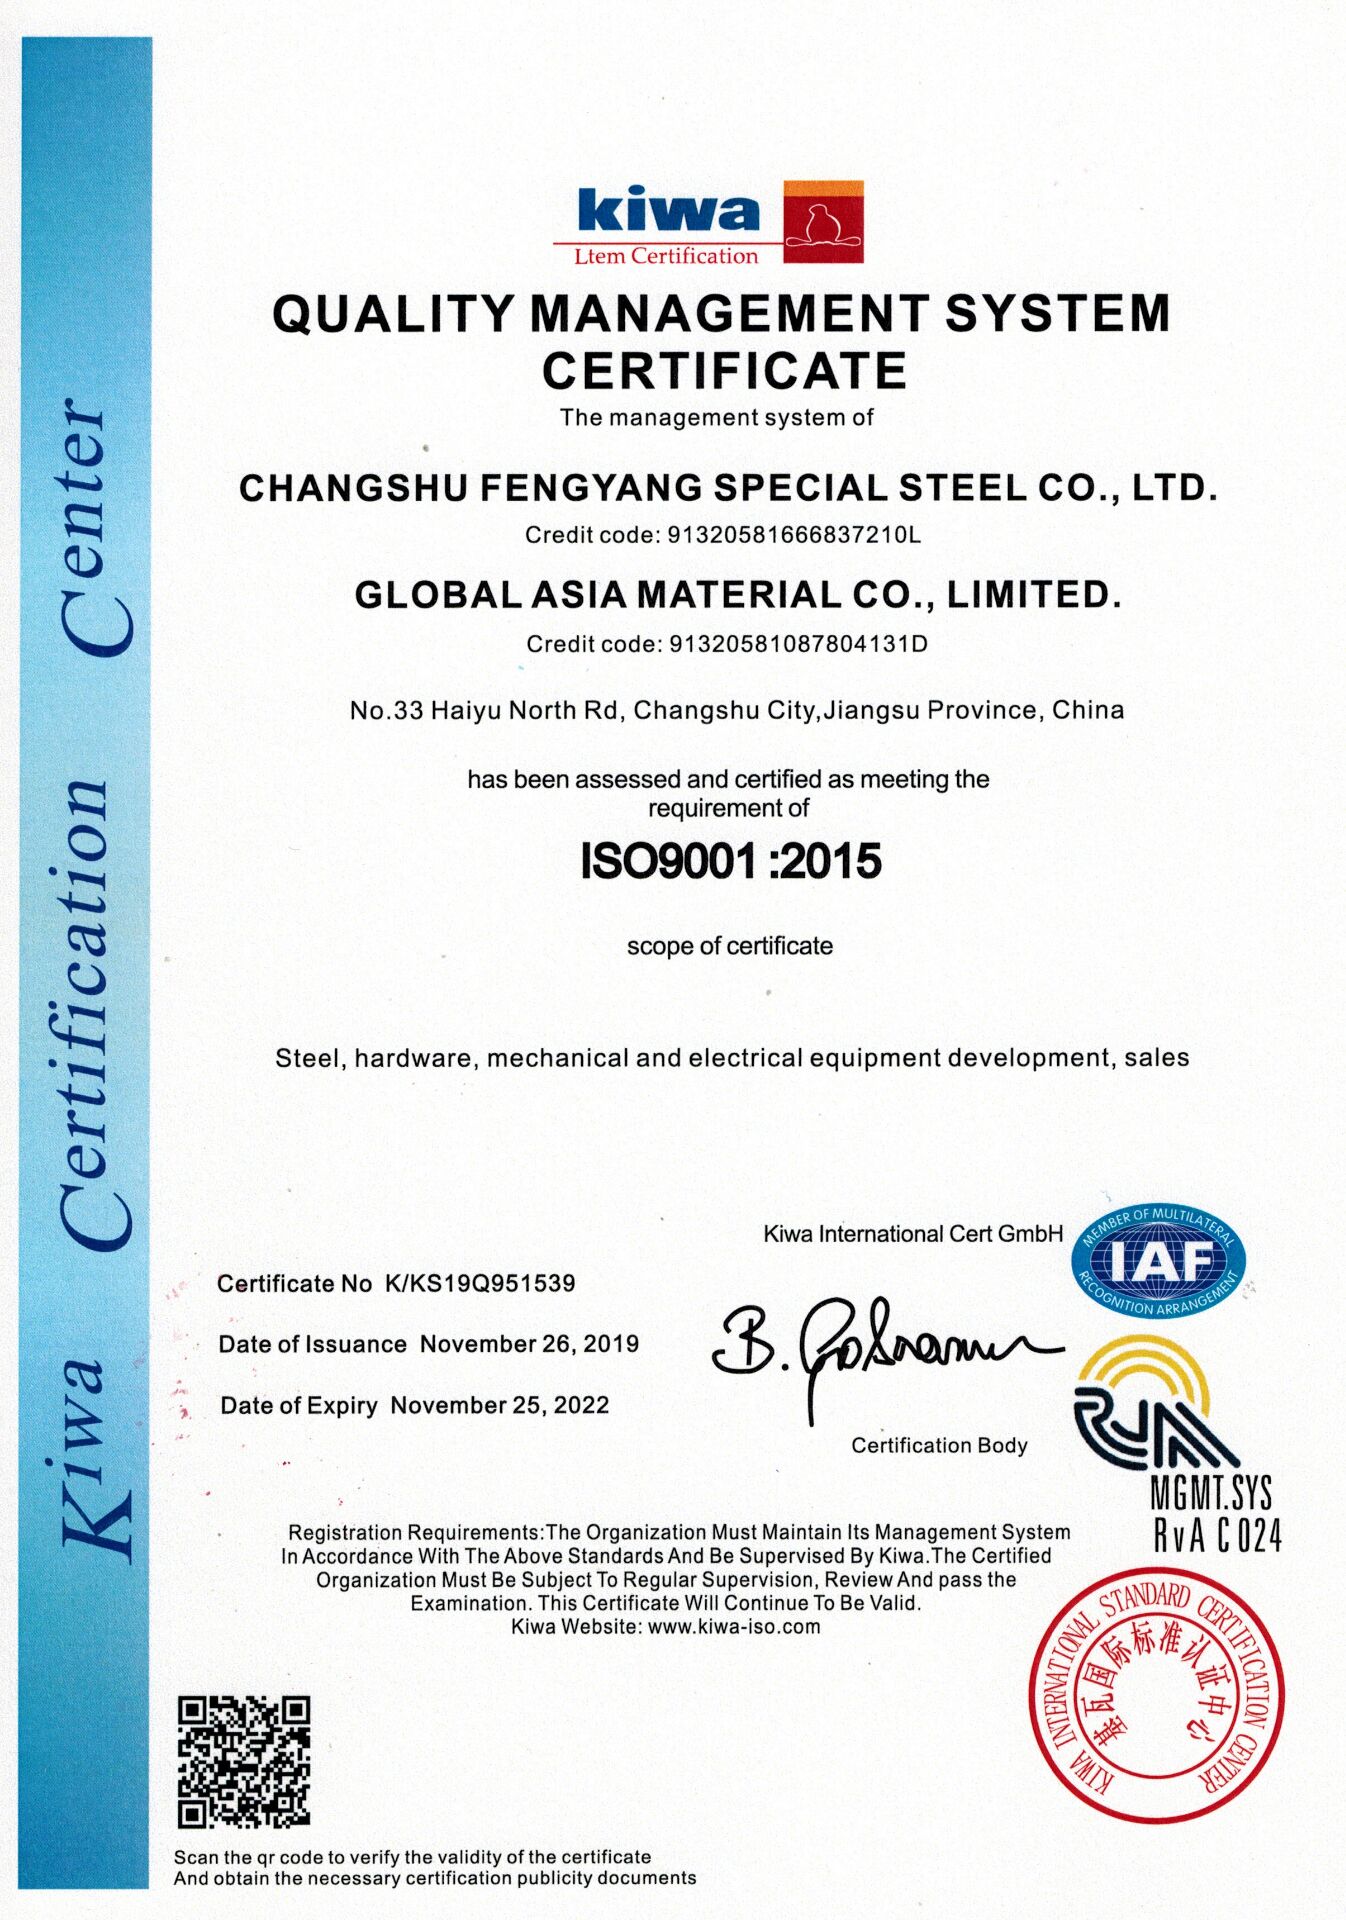 Kiwa System Certificate